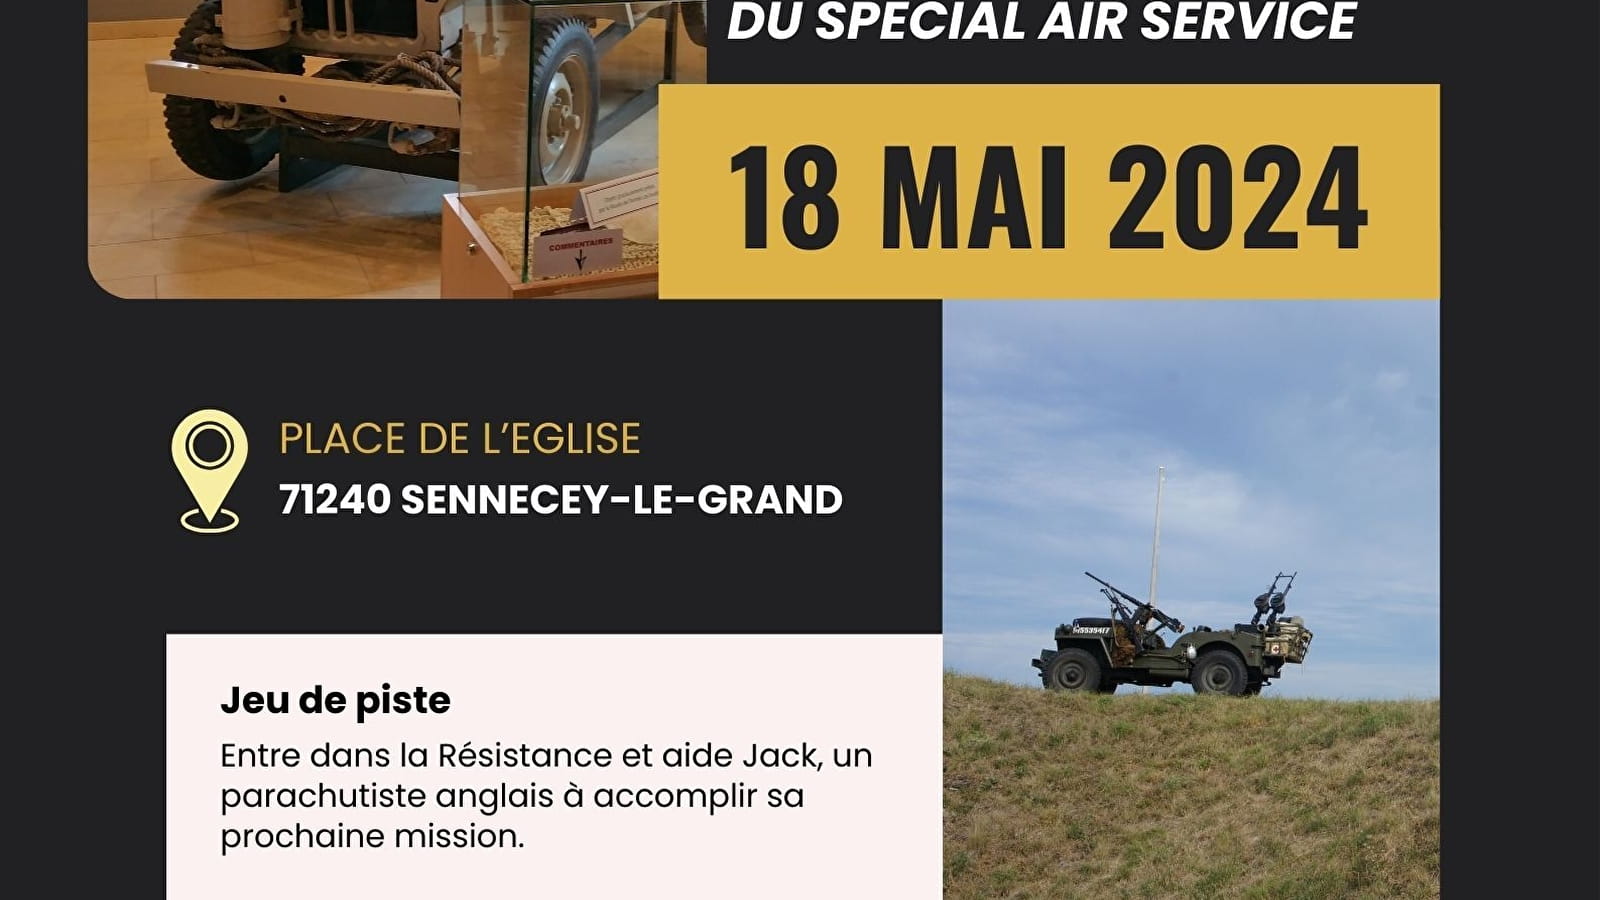 Europese Museumnacht: In het parachutistenmuseum van de speciale luchtdienst